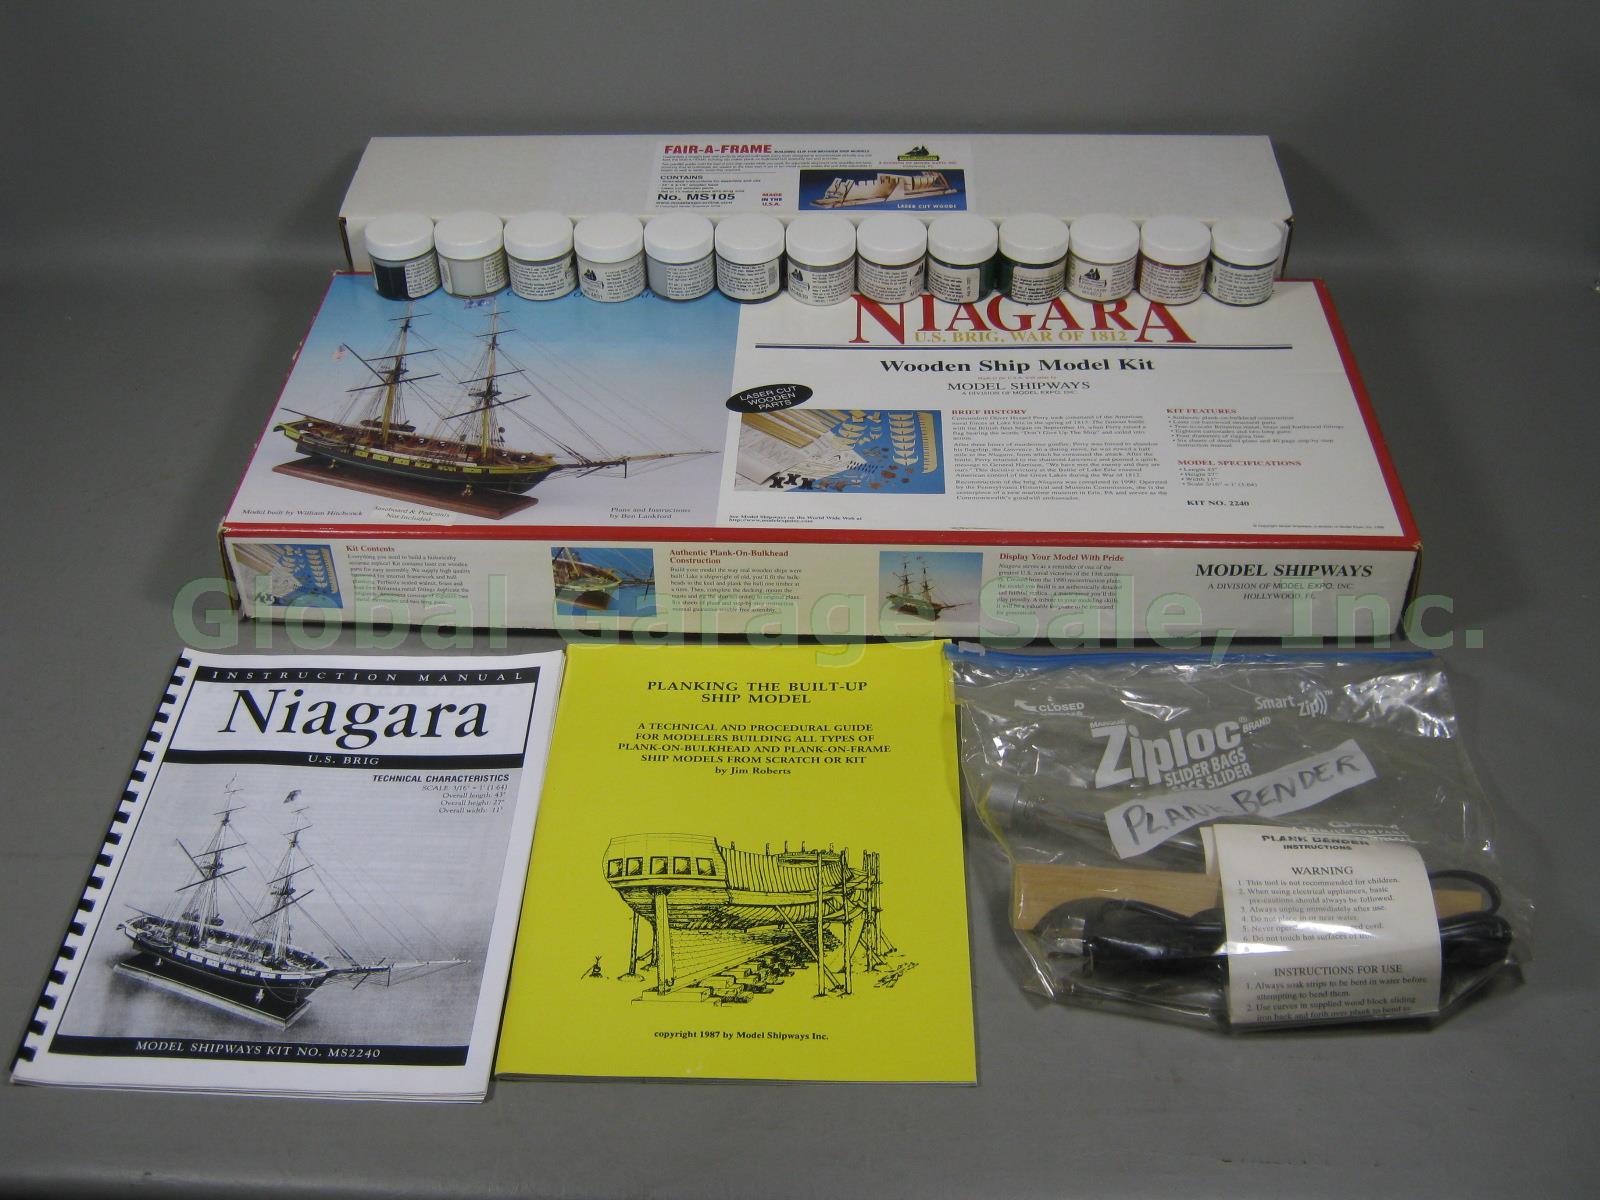 Model Shipways Niagara US Brig War 1812 Wooden Ship Model Kit 2240 Fair-A-Frame